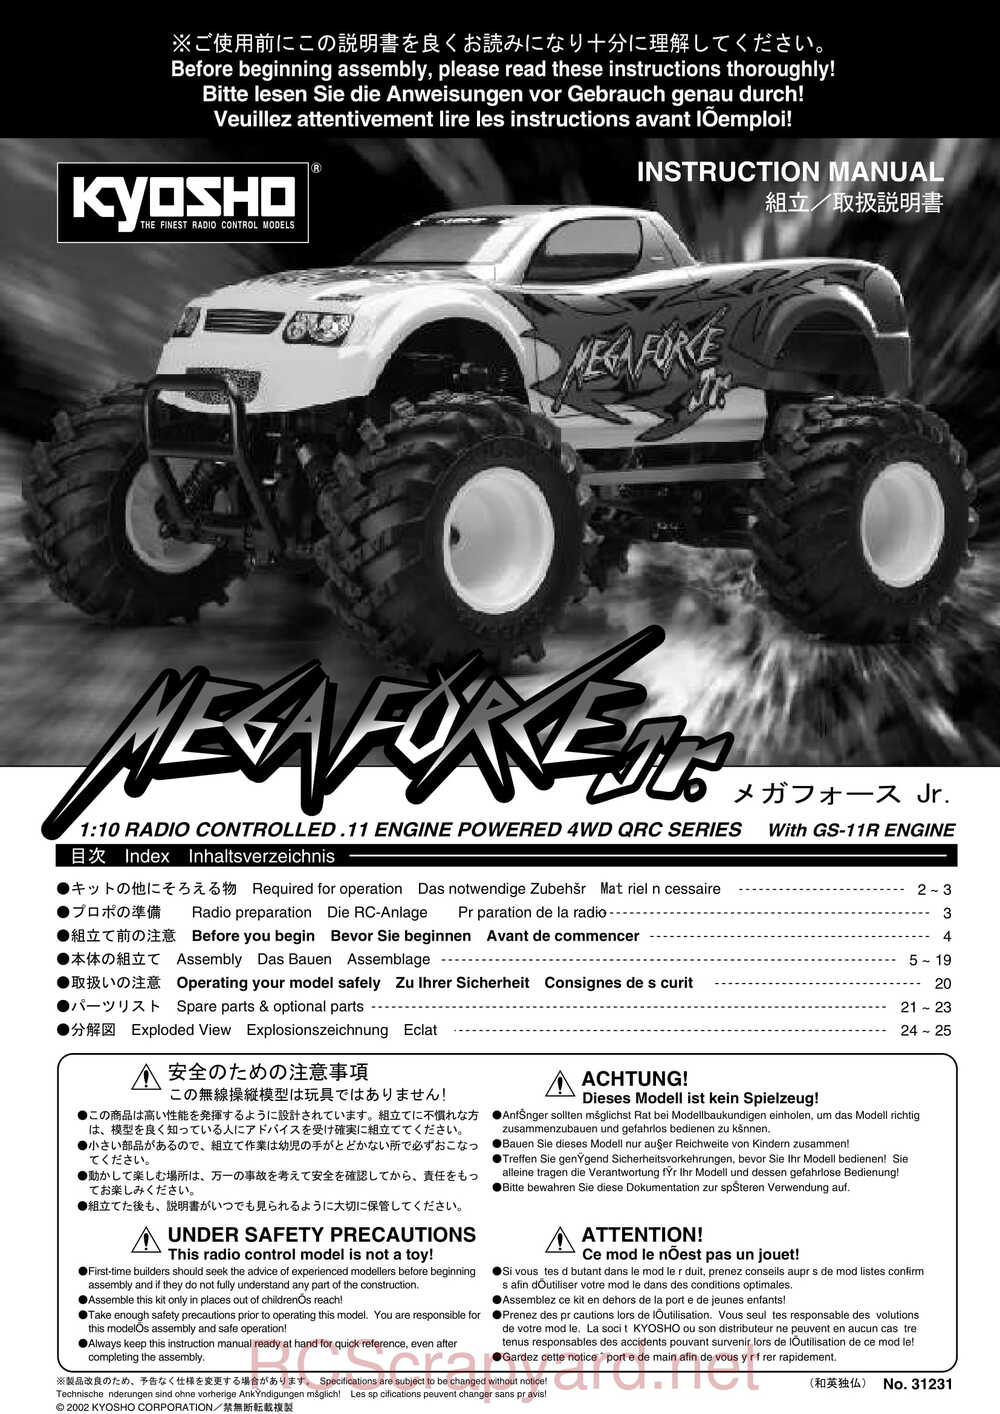 Kyosho - 31231 - Mega-Force-Jr - Manual - Page 01